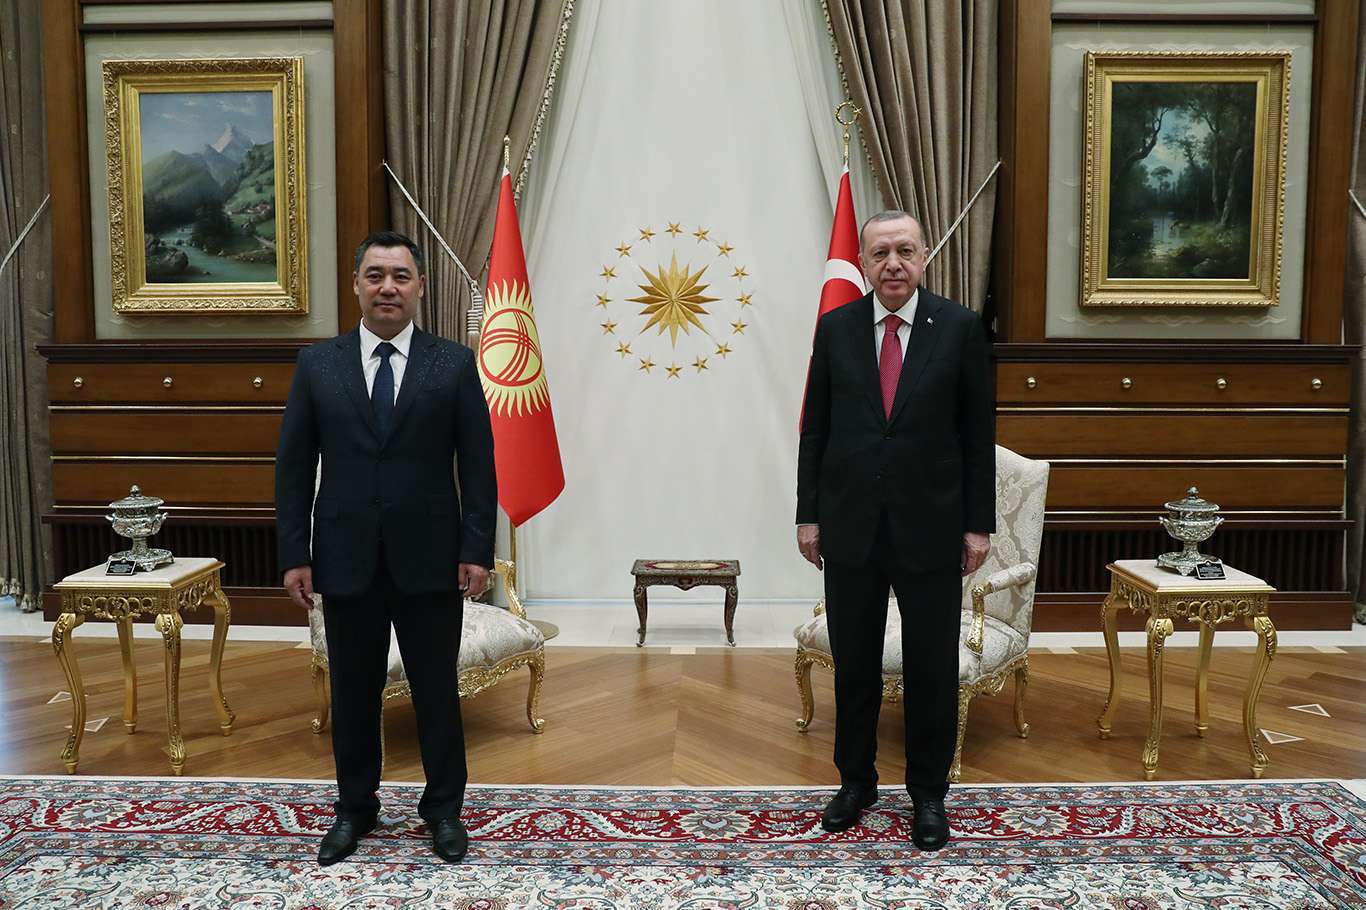 Turkey will further strengthen its ties of eternal brotherhood with Kyrgyzstan: Erdoğan